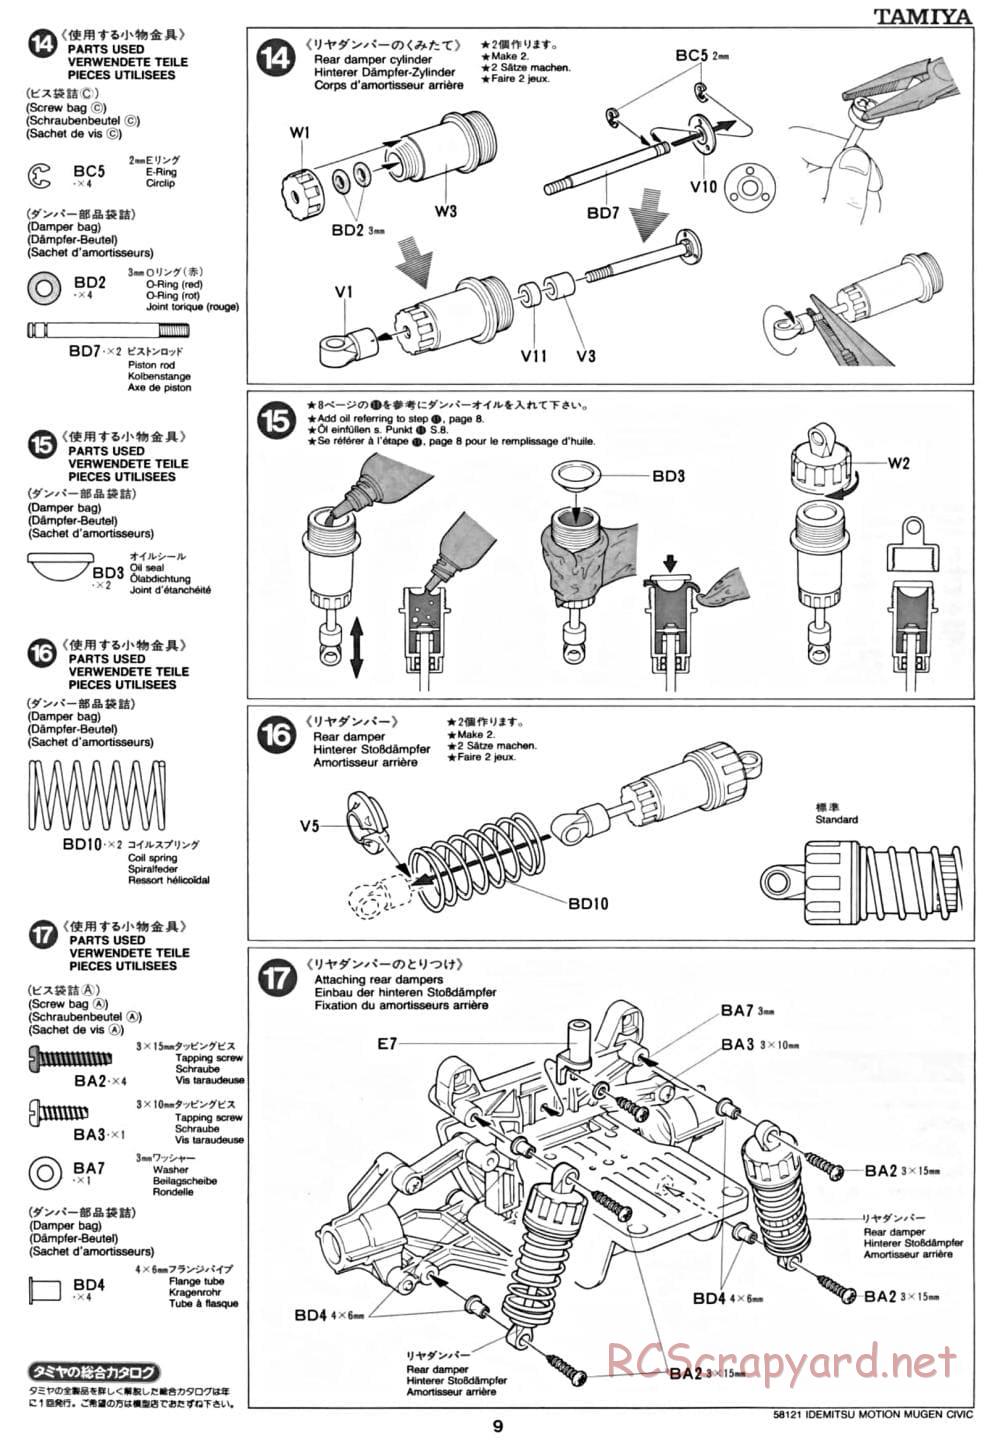 Tamiya - Idemitsu Motion Mugen Civic - FF-01 Chassis - Manual - Page 9